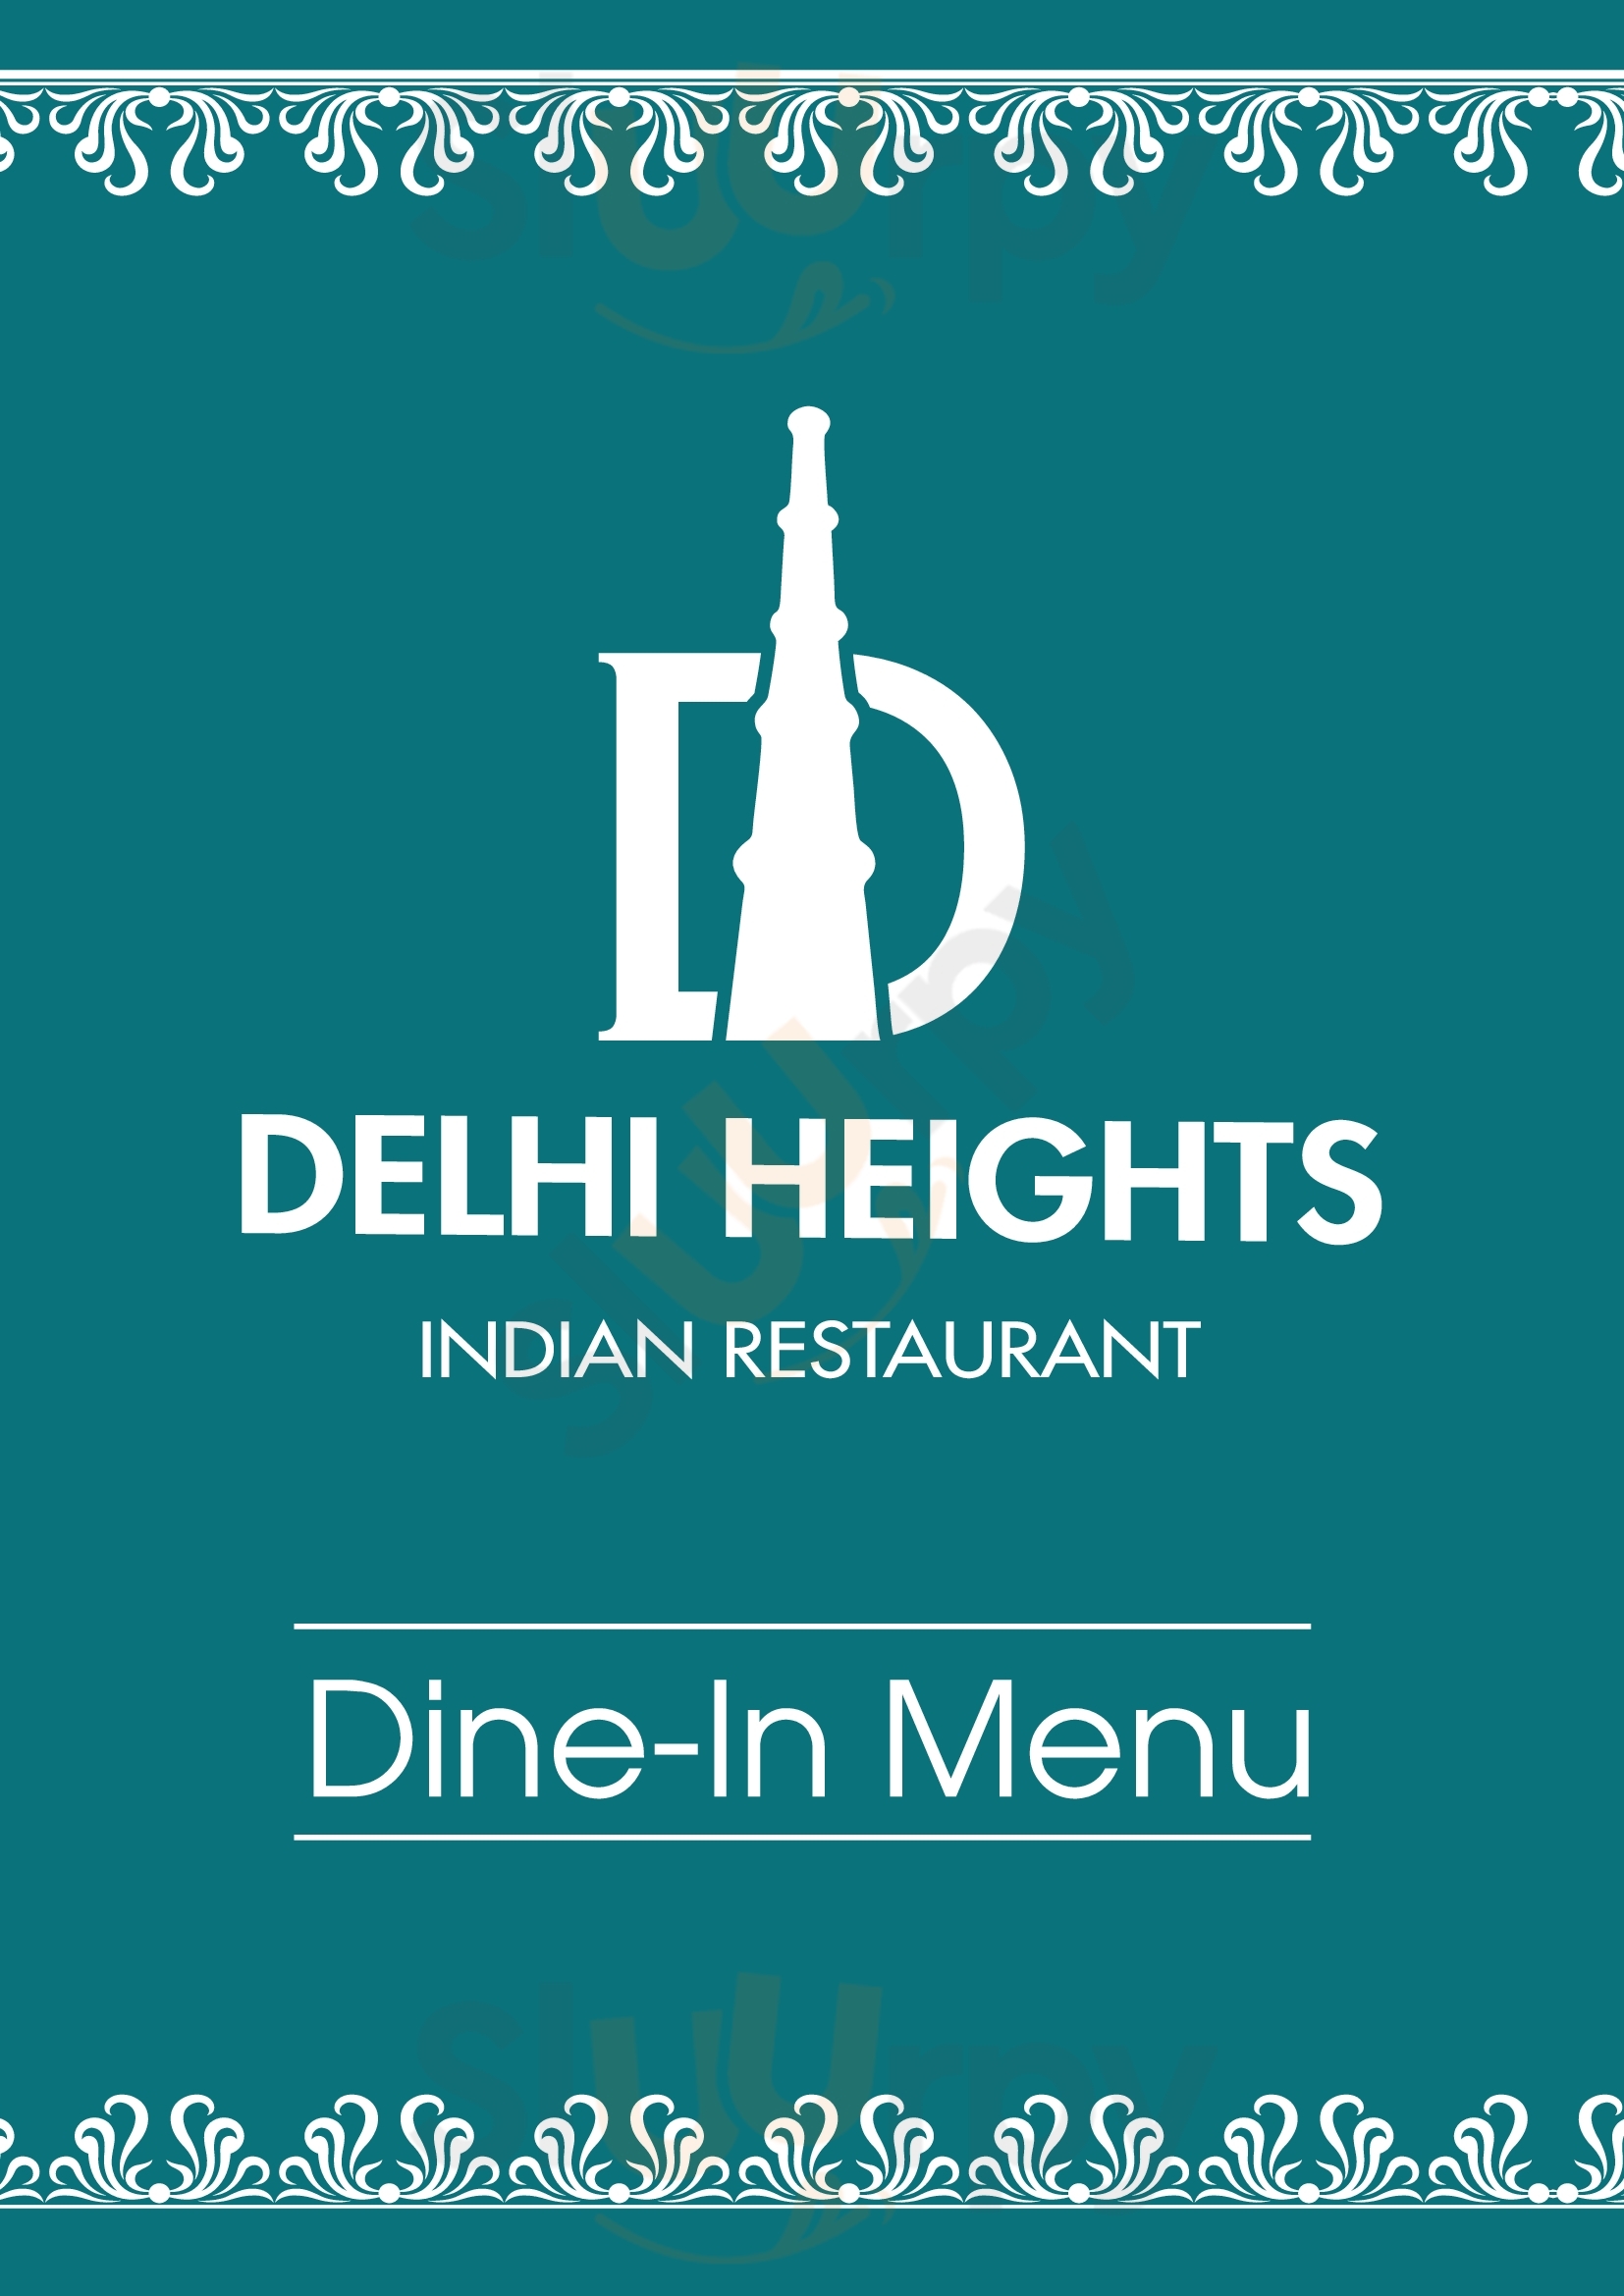 Delhi Heights Restaurant & Bar Auckland Central Menu - 1